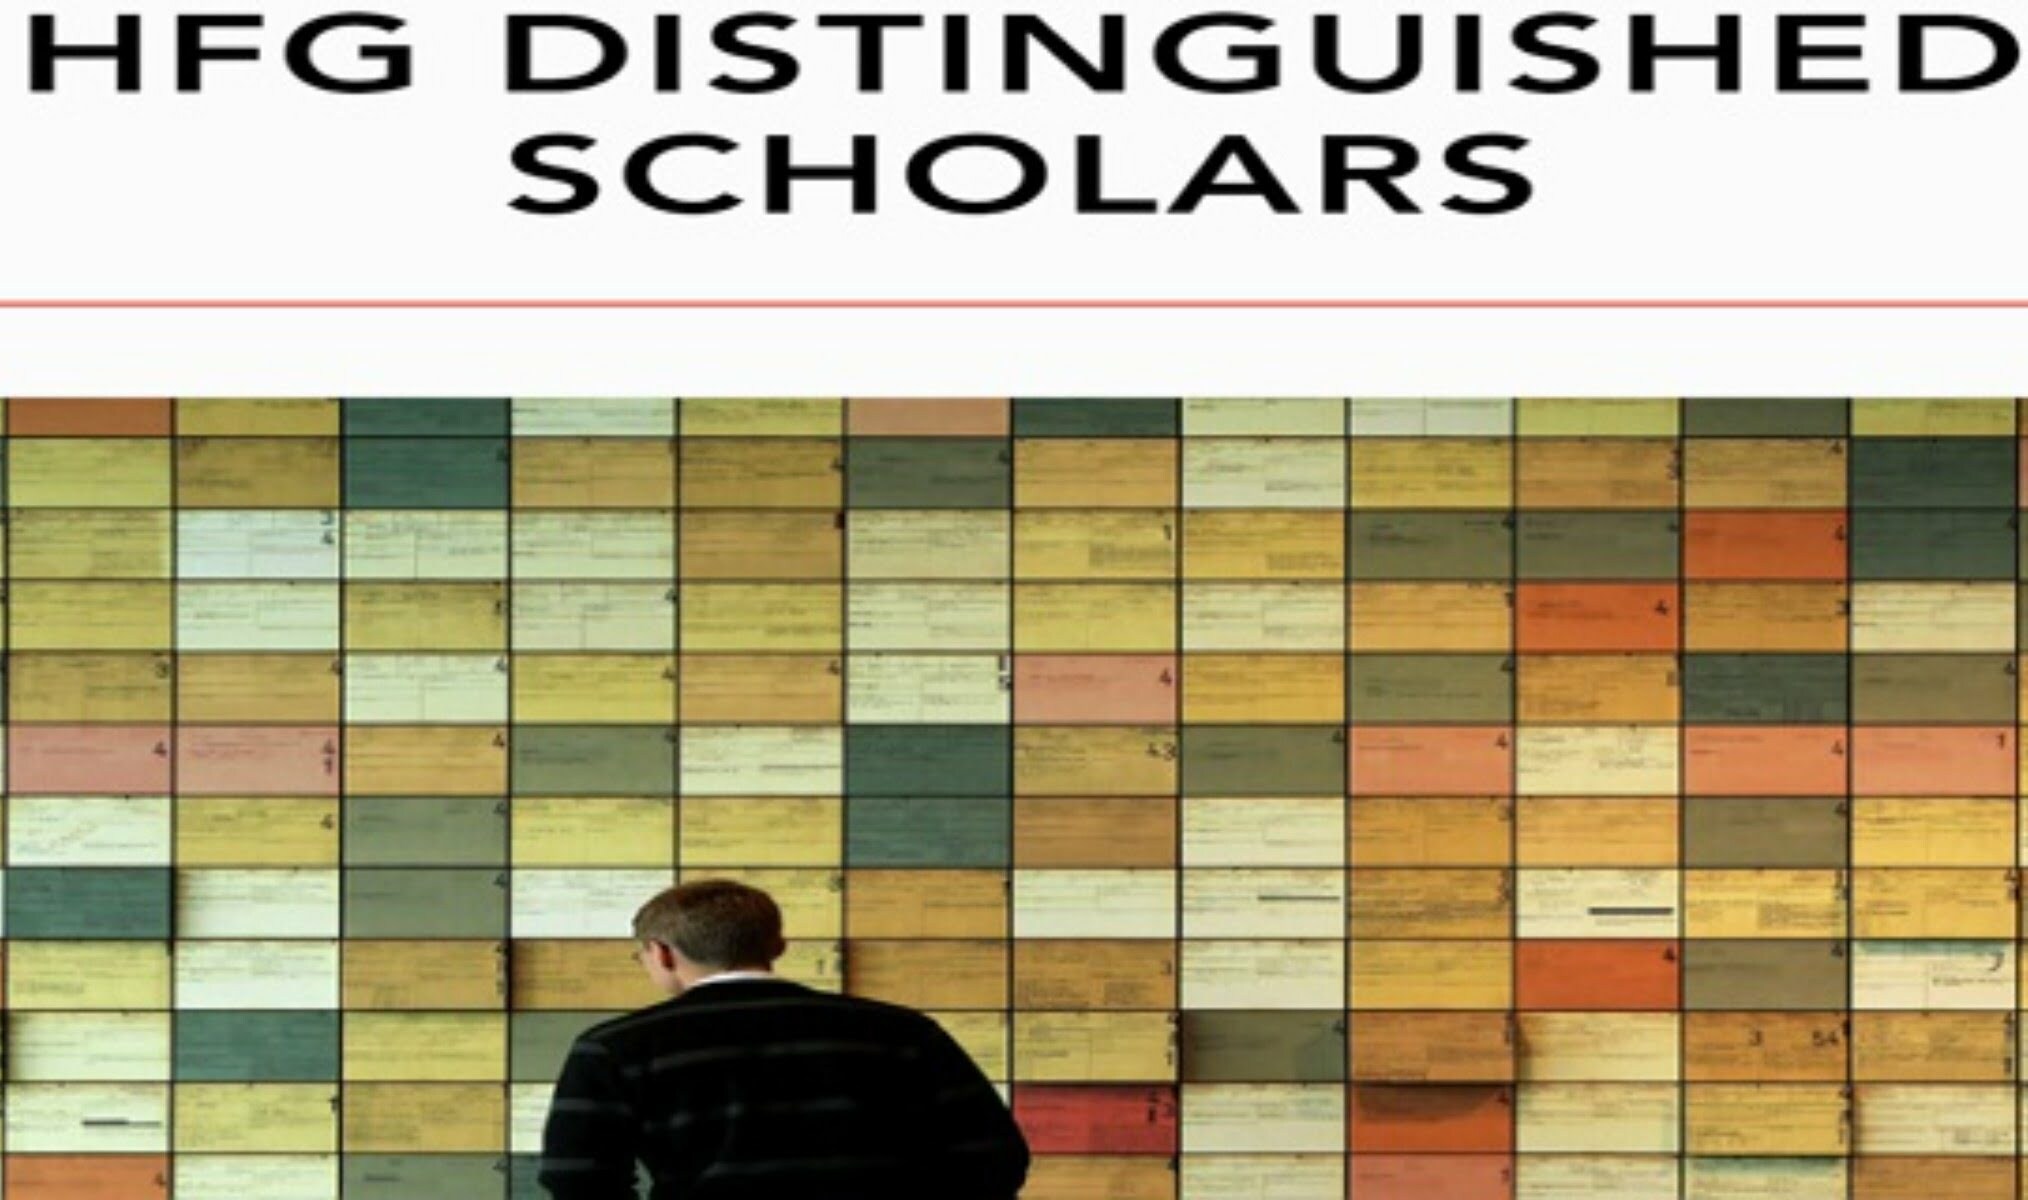 HFG Distinguished Scholar Awards 2023 for Researchers